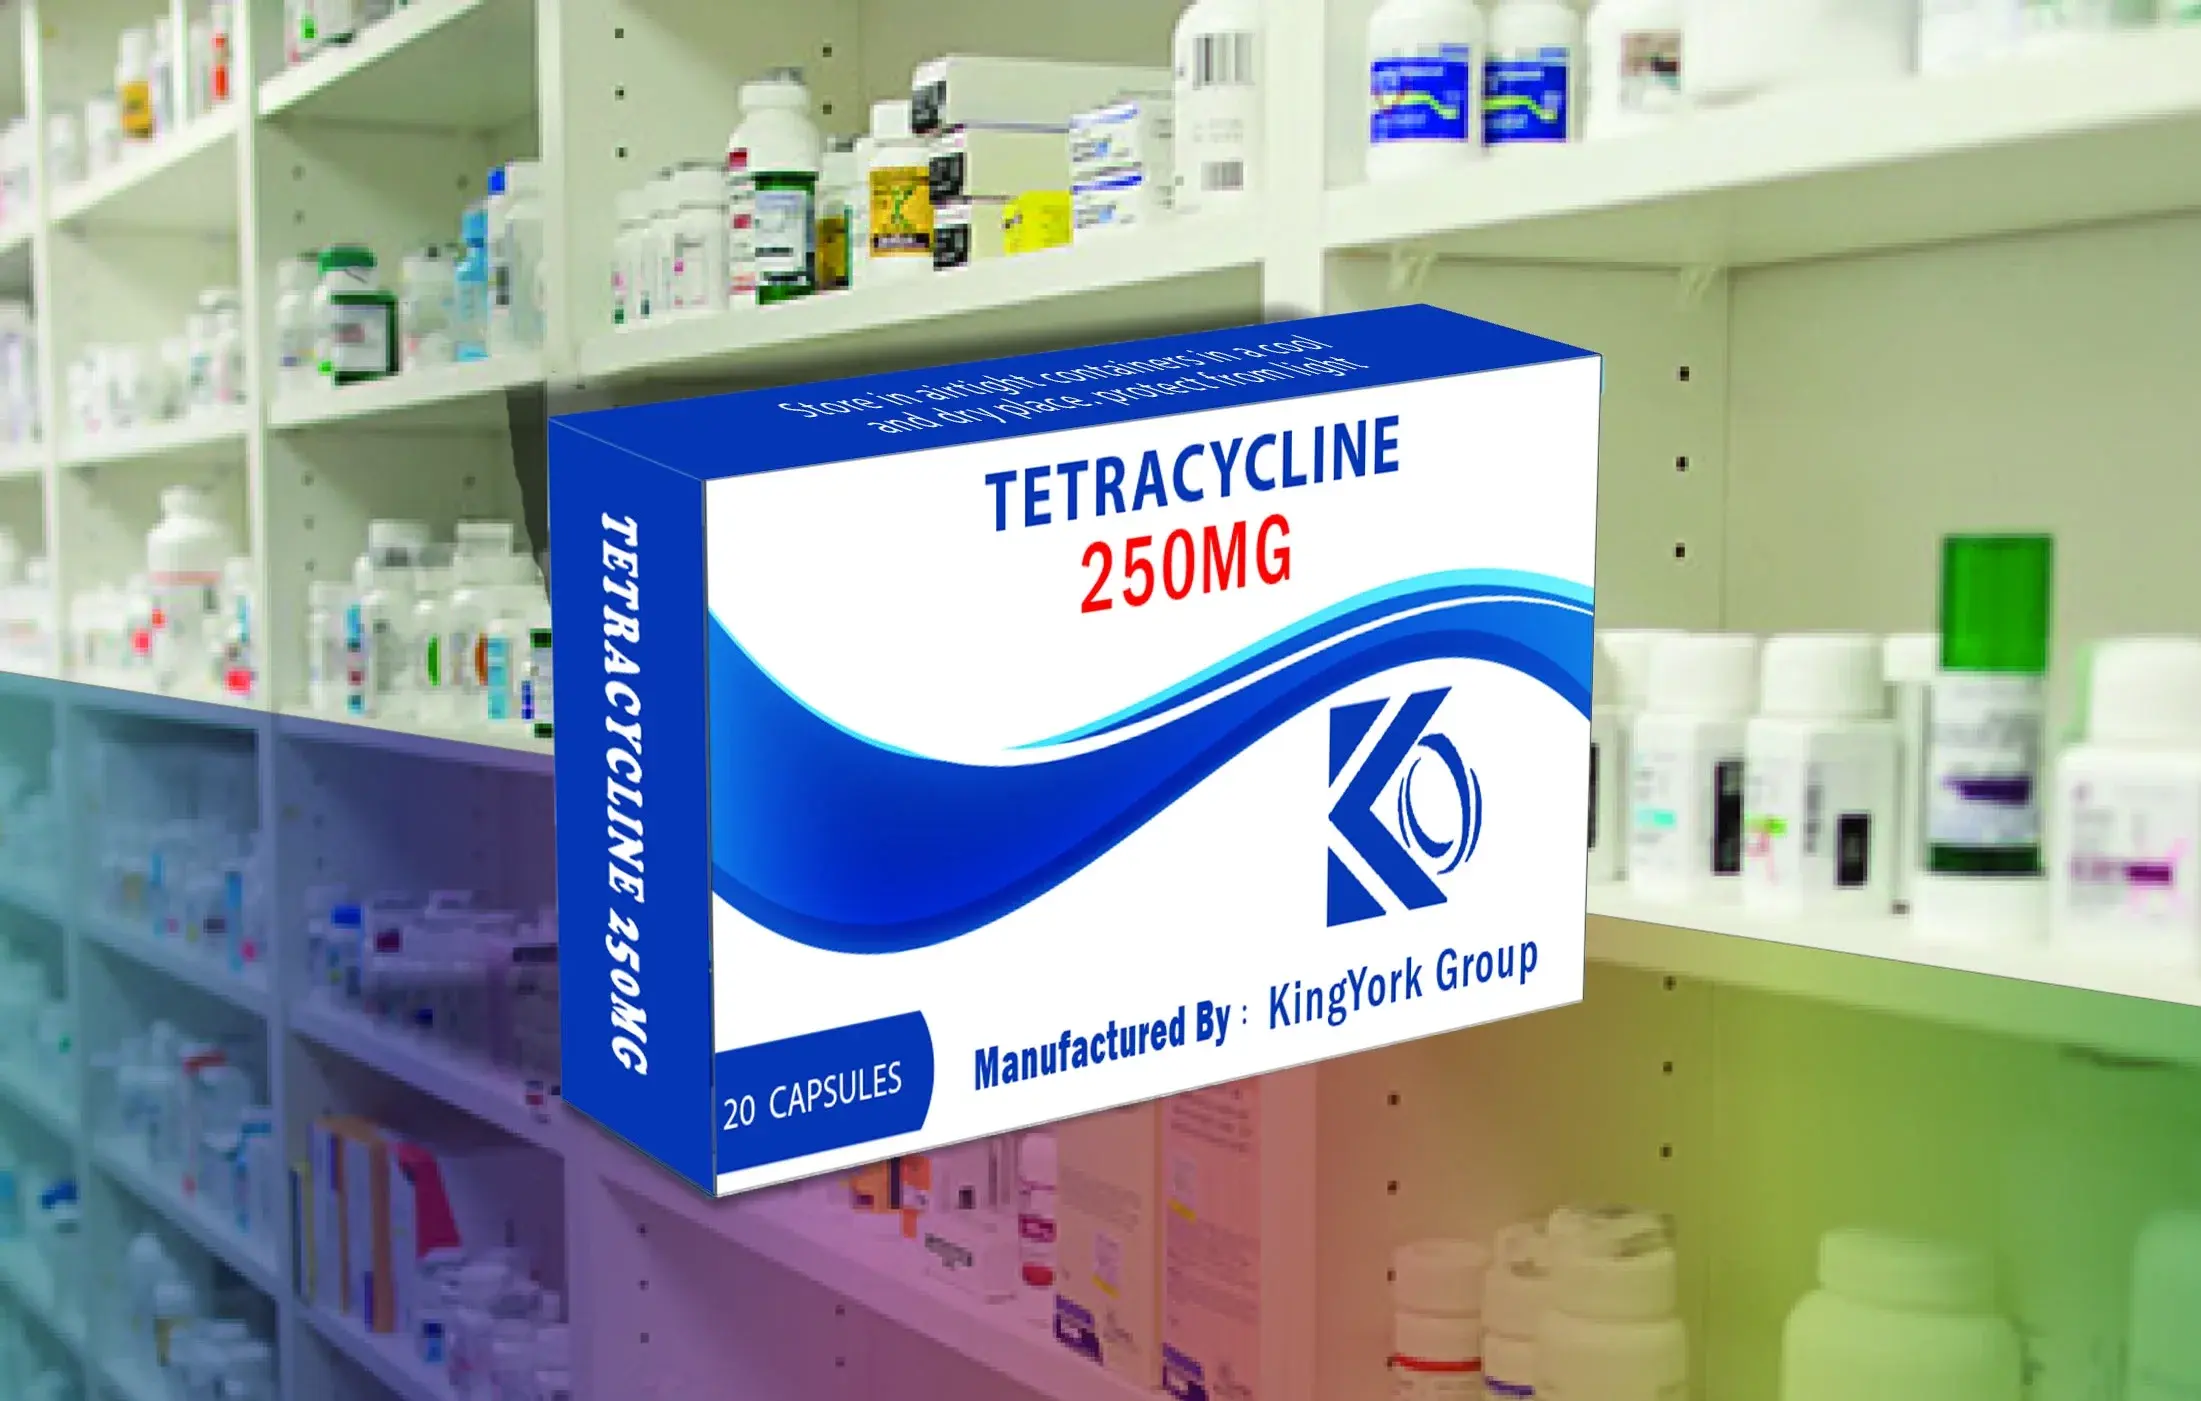 tetracycline 250mg Capsules in China